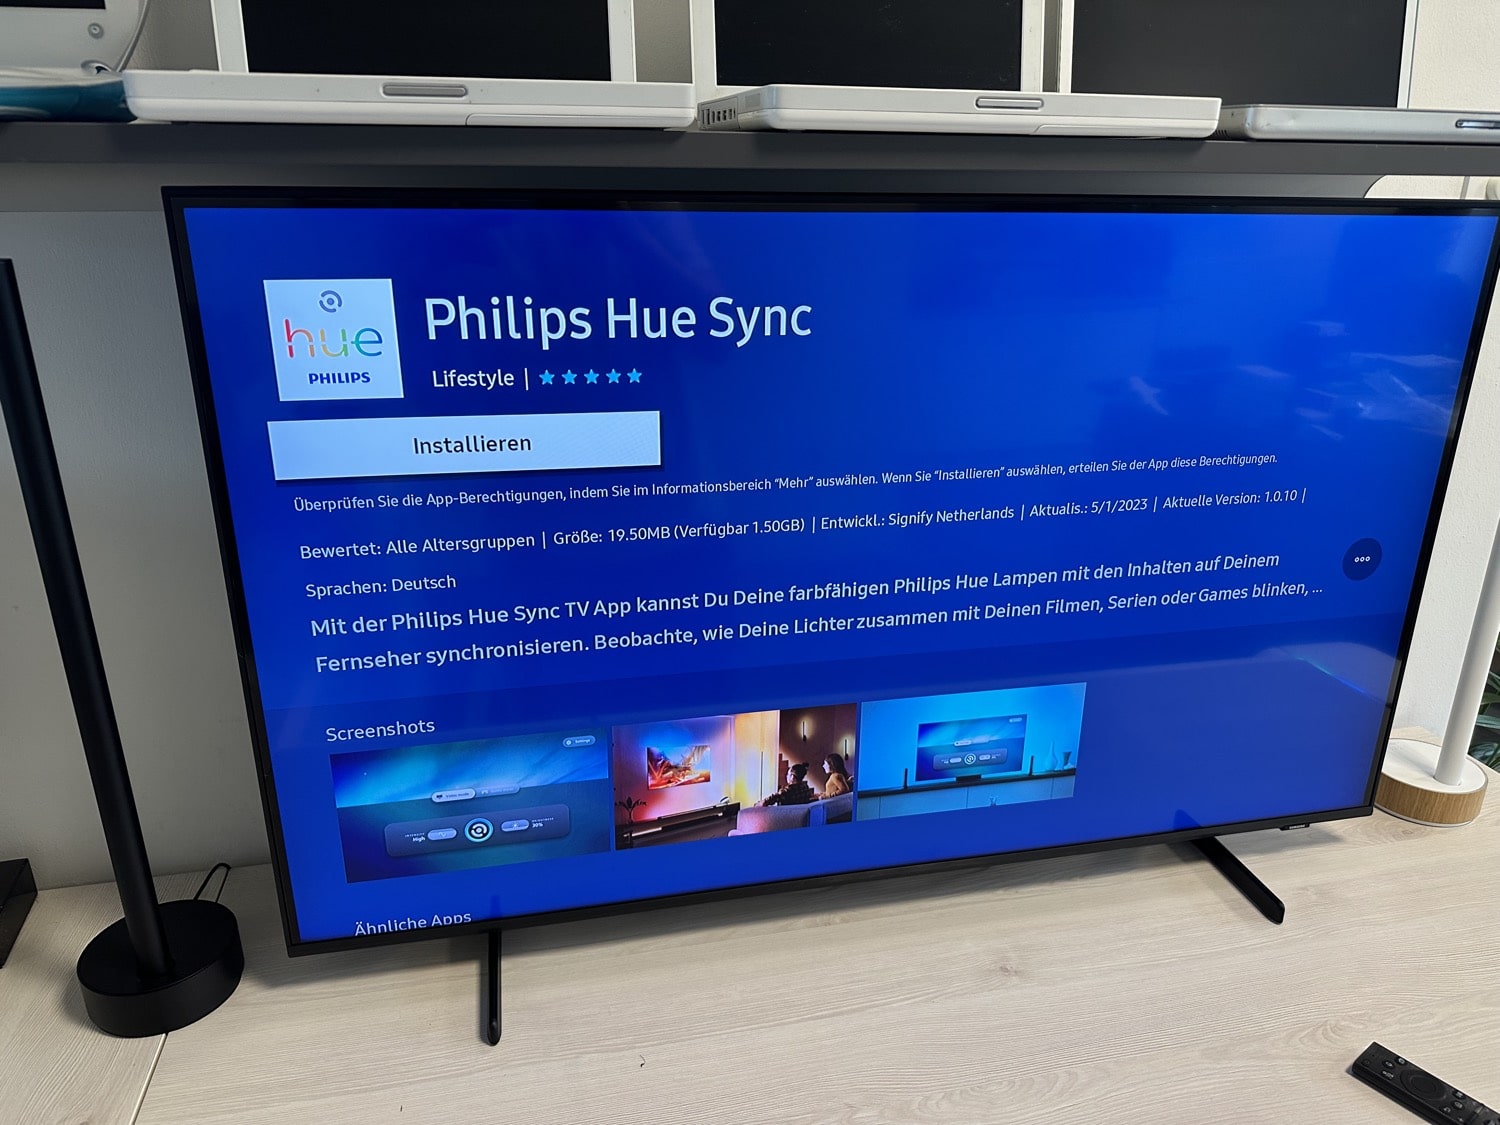 Philips Hue Sync app transforms video into a brilliant light show